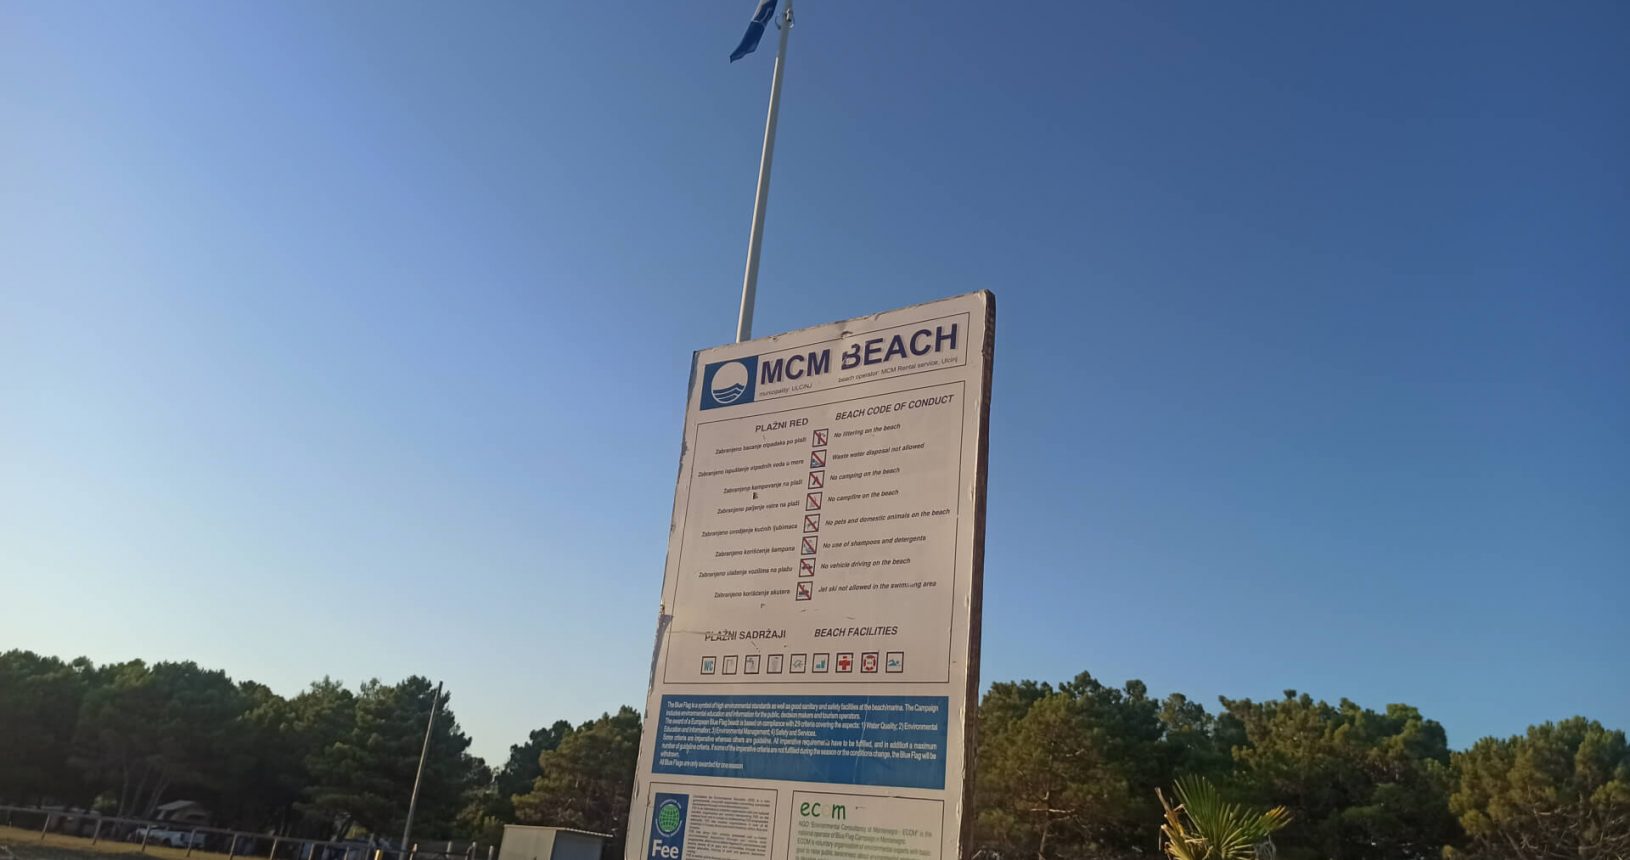 MCM Beach sign and blue flag